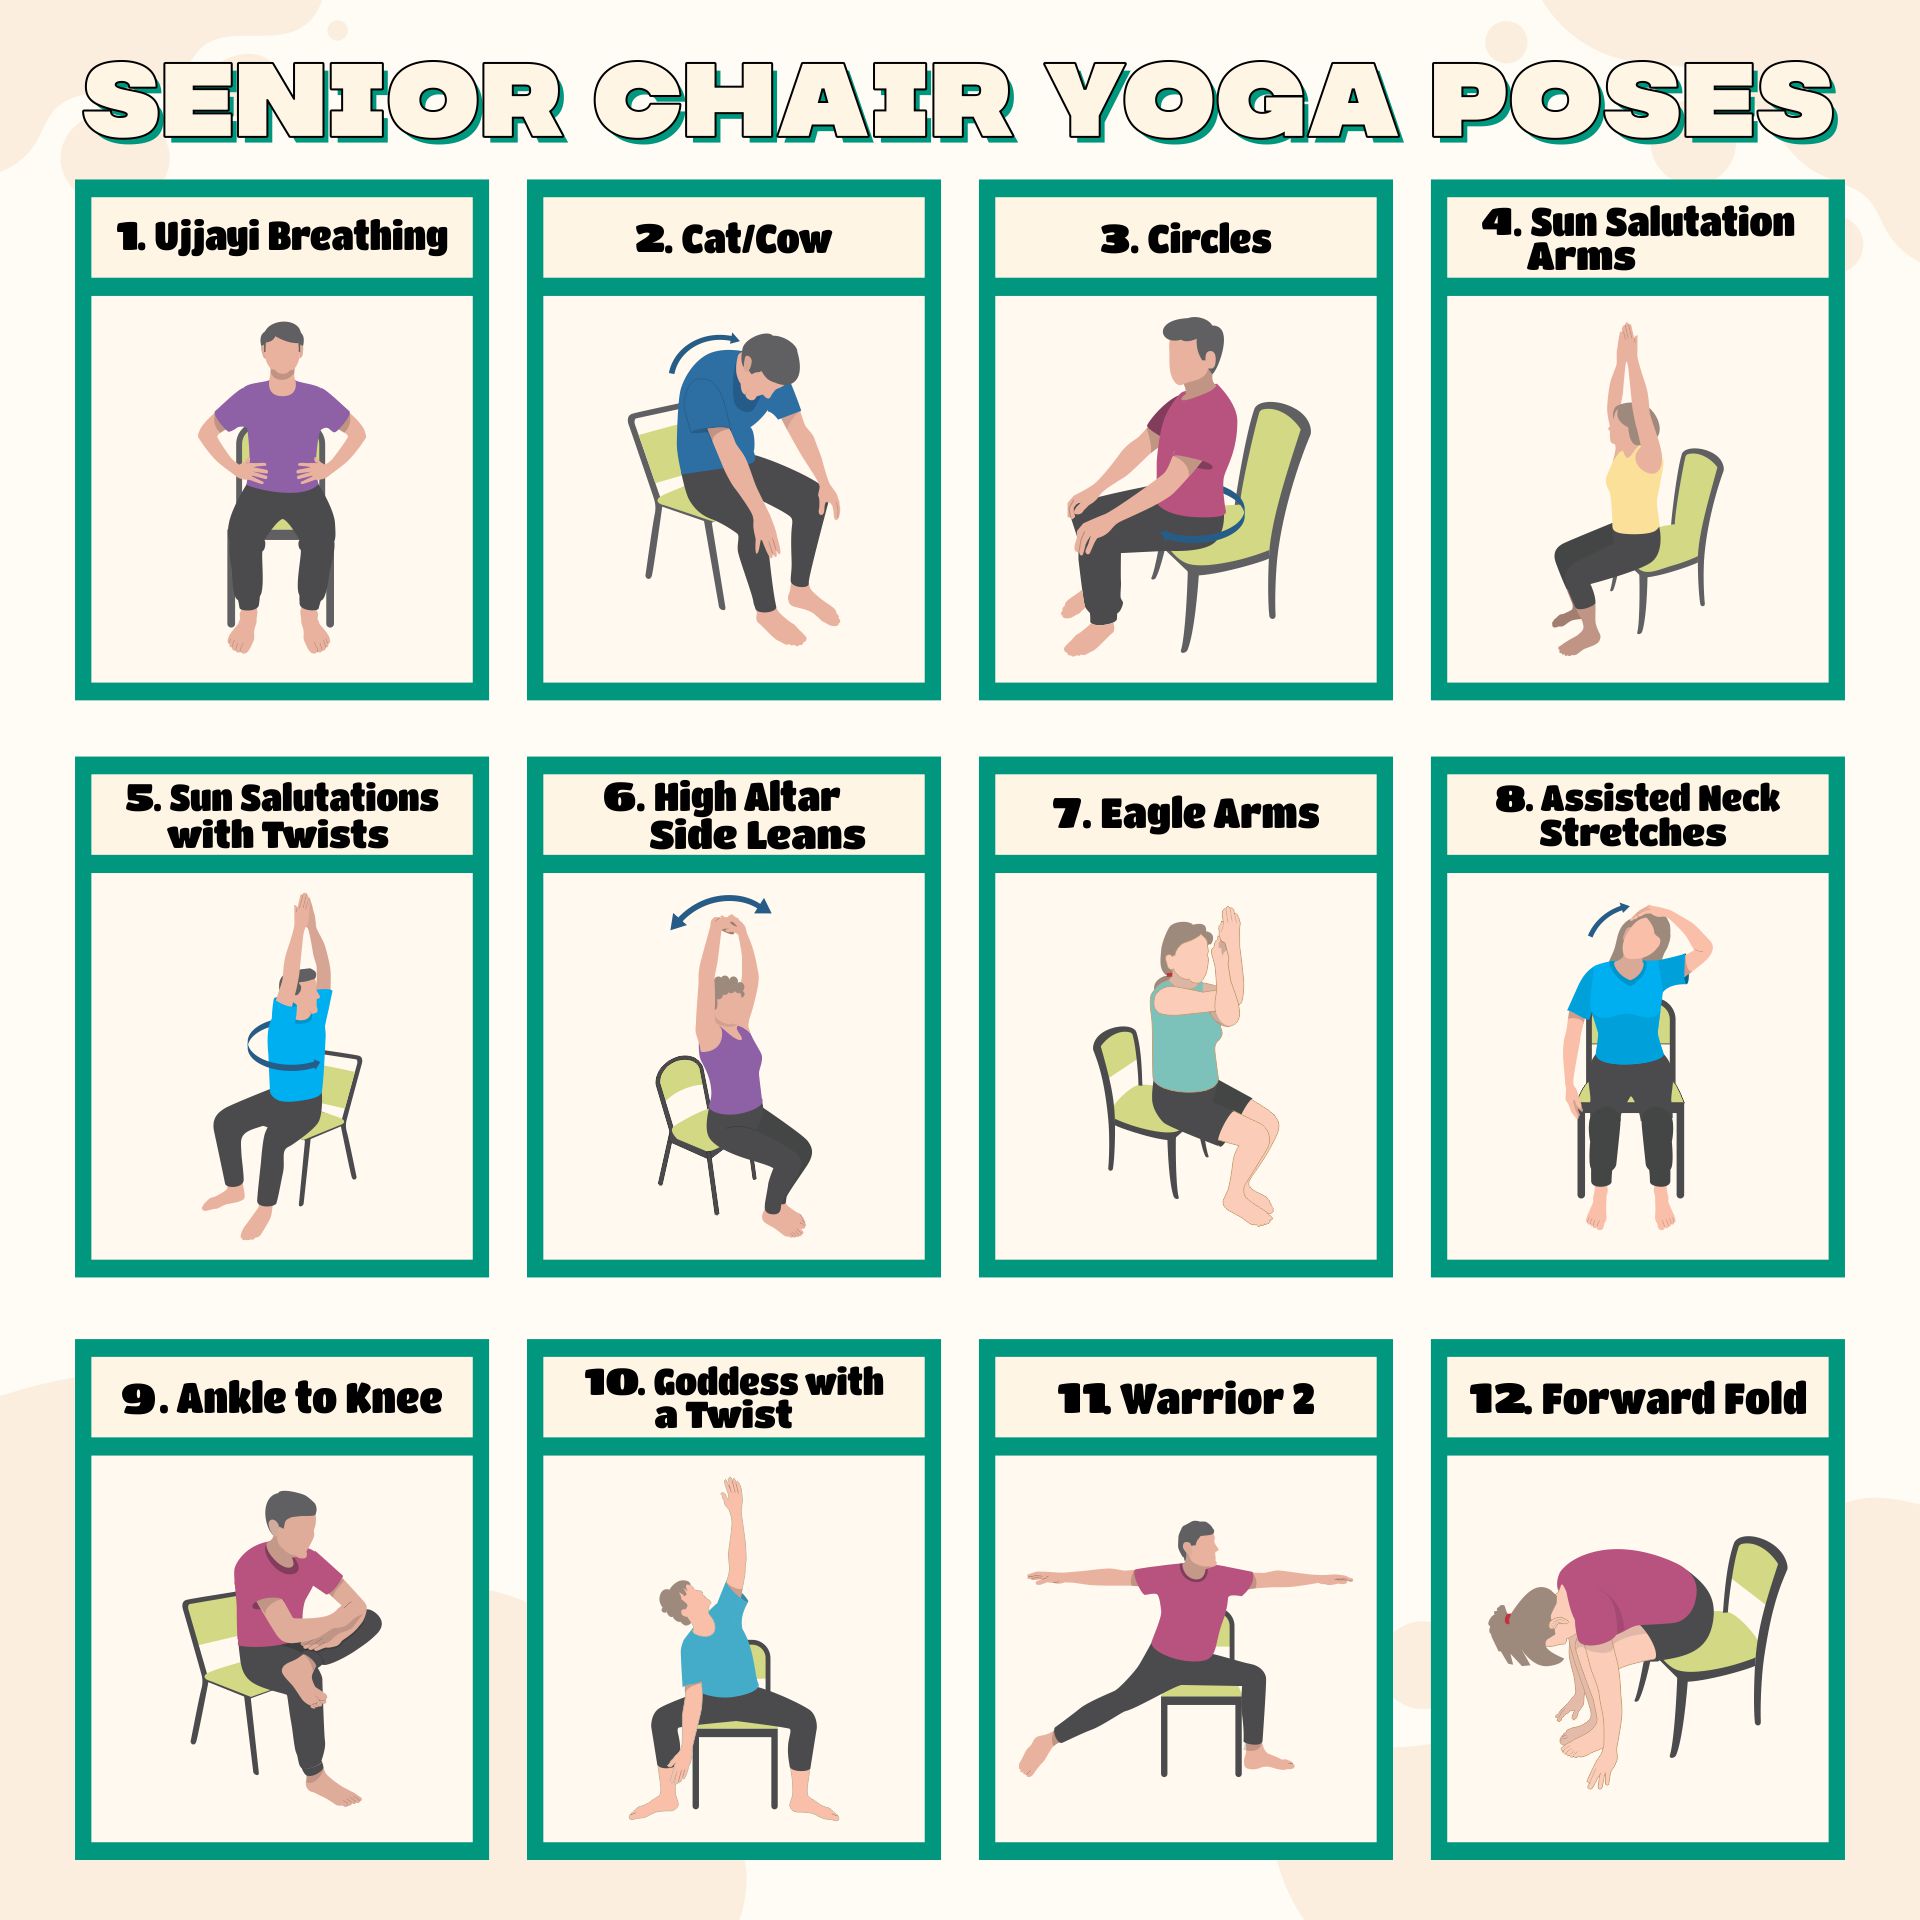 Printable Chair Yoga Exercises For Seniors